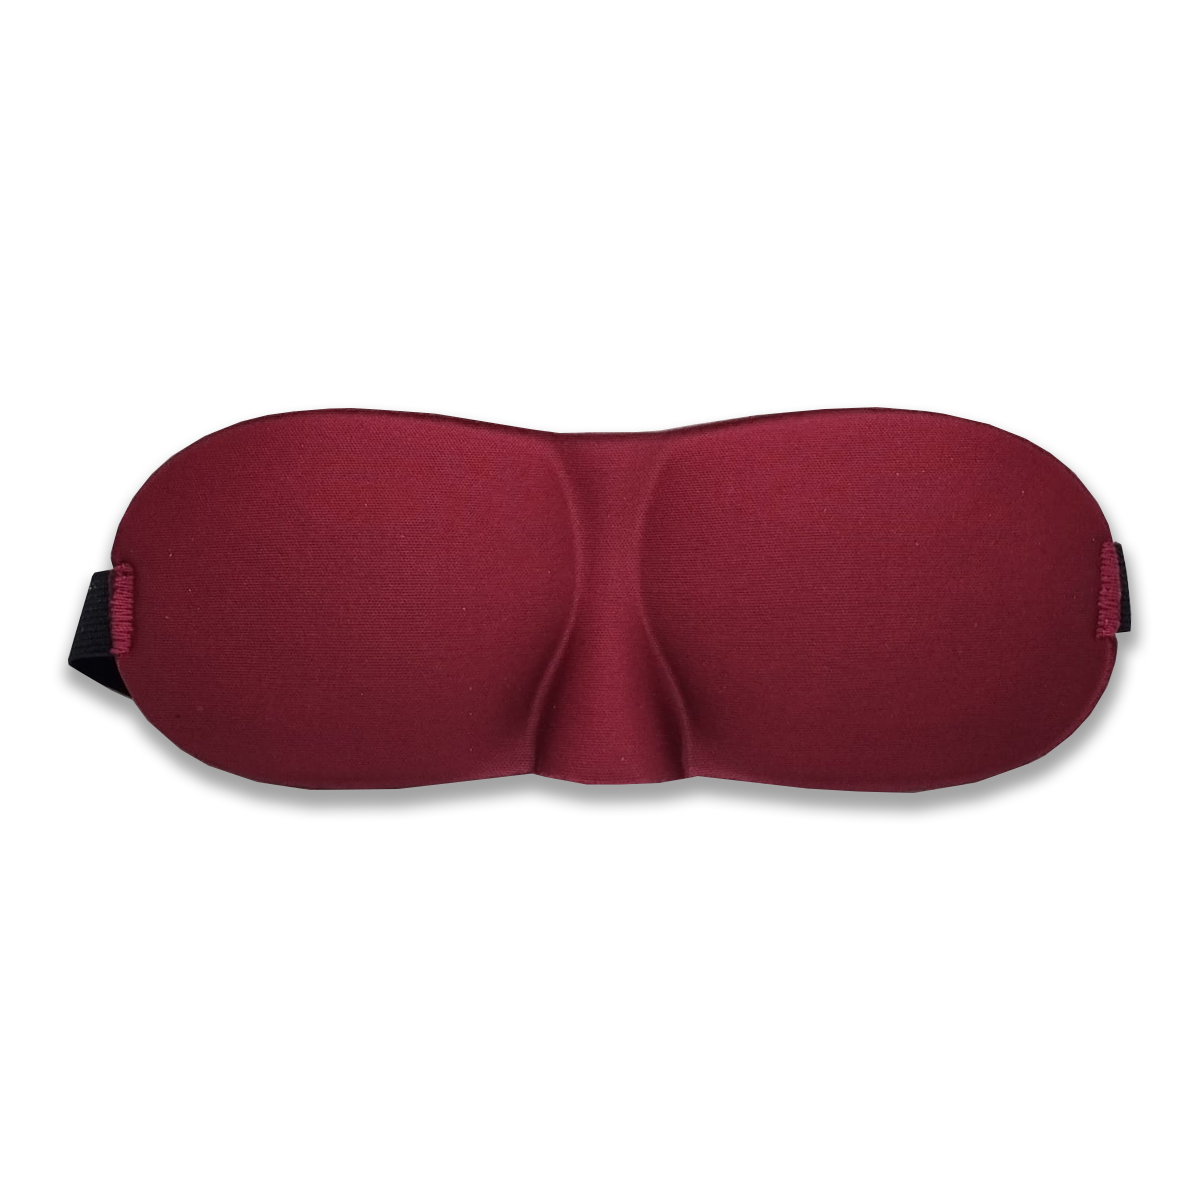 3D Eye Mask  Sleep Eyepatch Blindfold Shield Travel Sleeping Aid (Maroon)